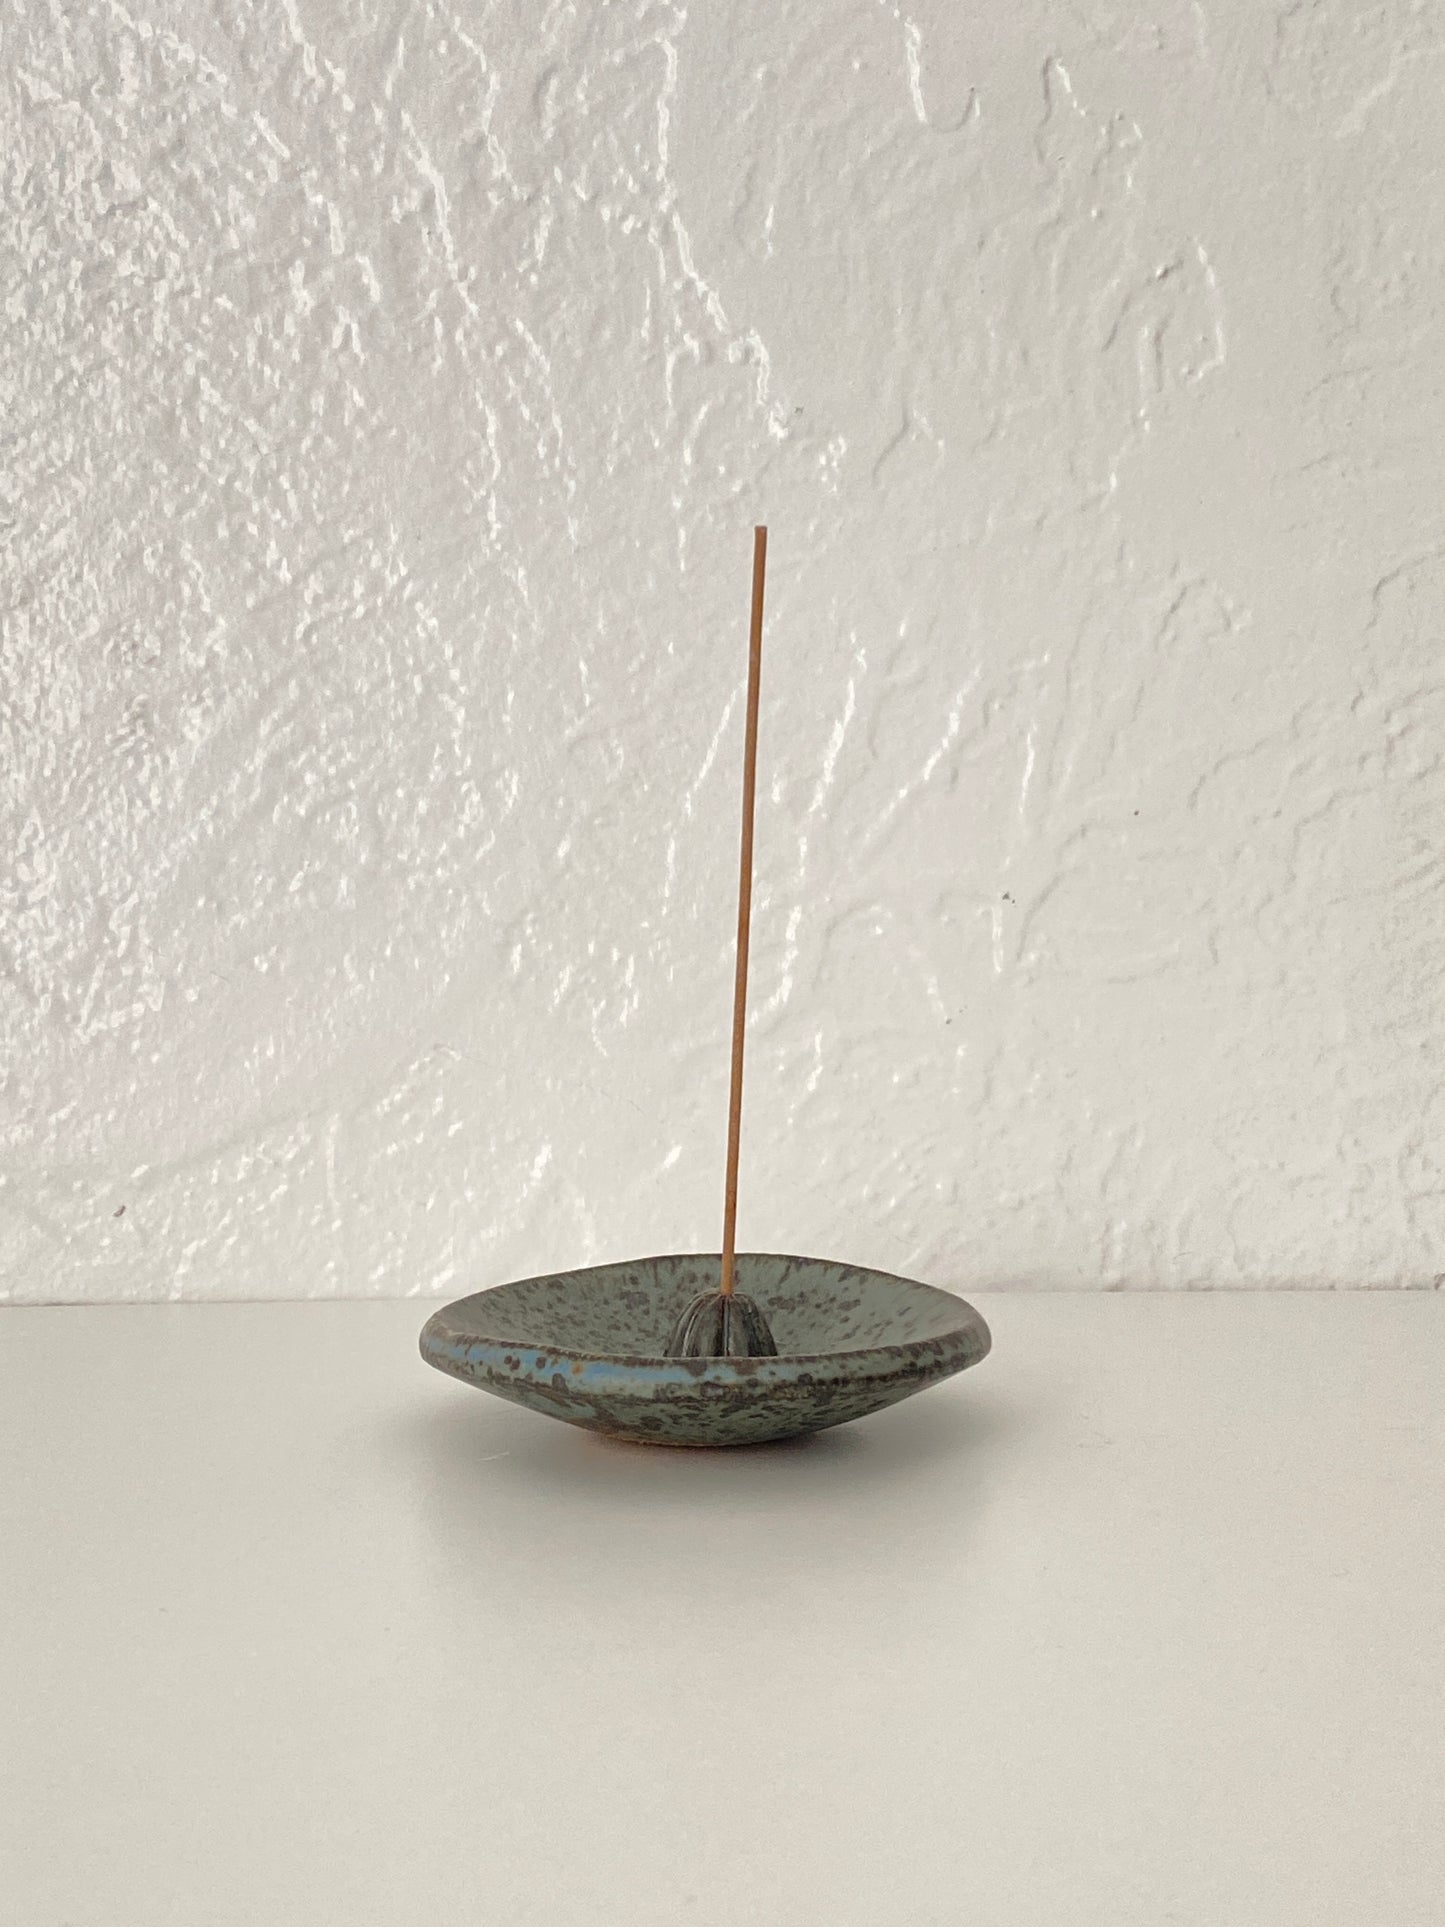 high fired stoneware incense burner - deep ocean